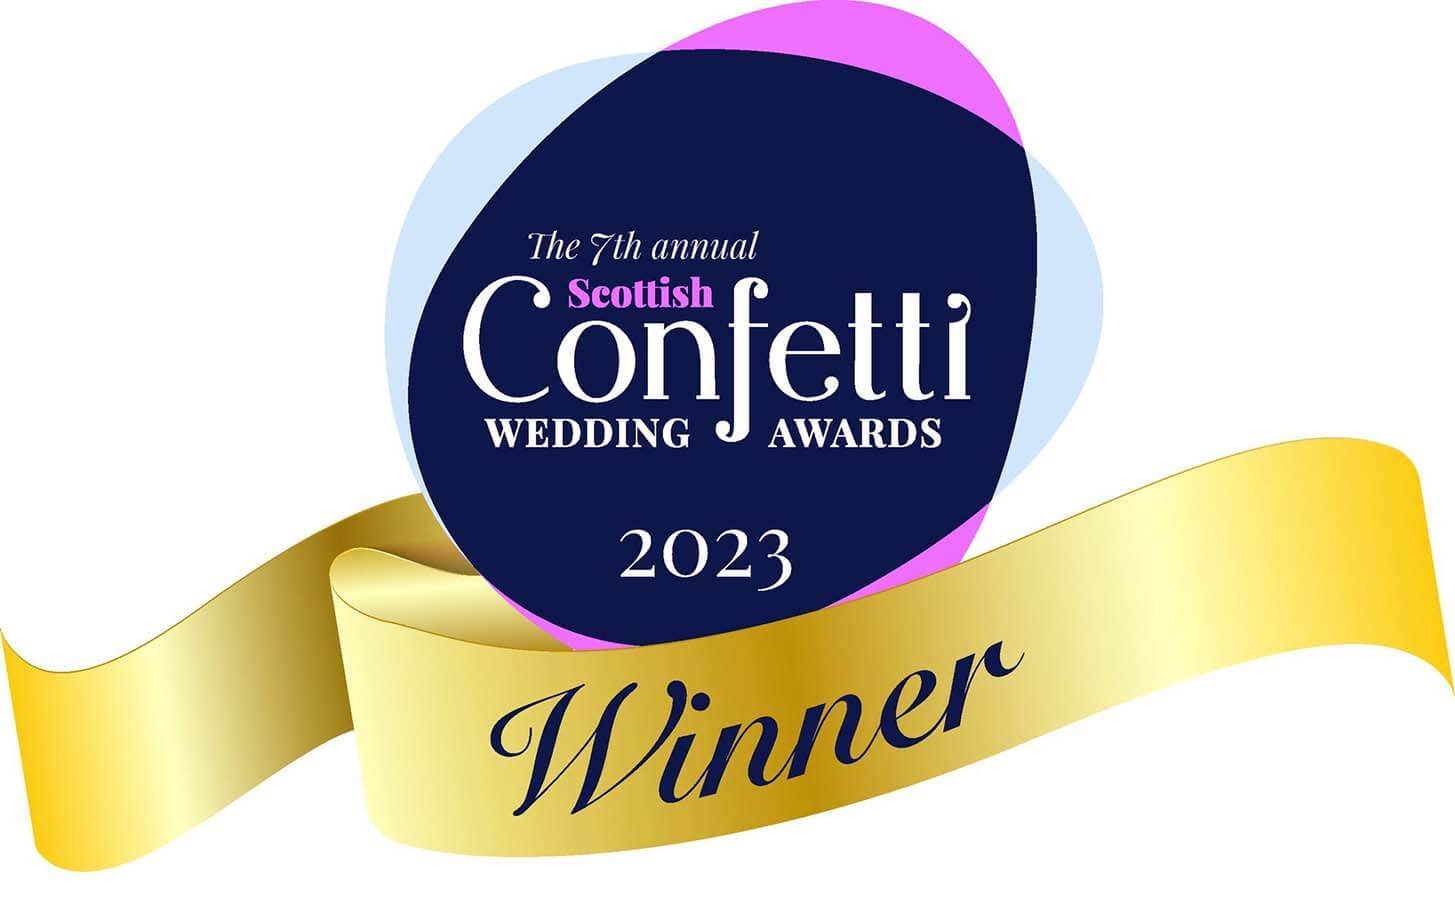 The 7th Annual Scottish Confetti Weddings Awards 2023 winner